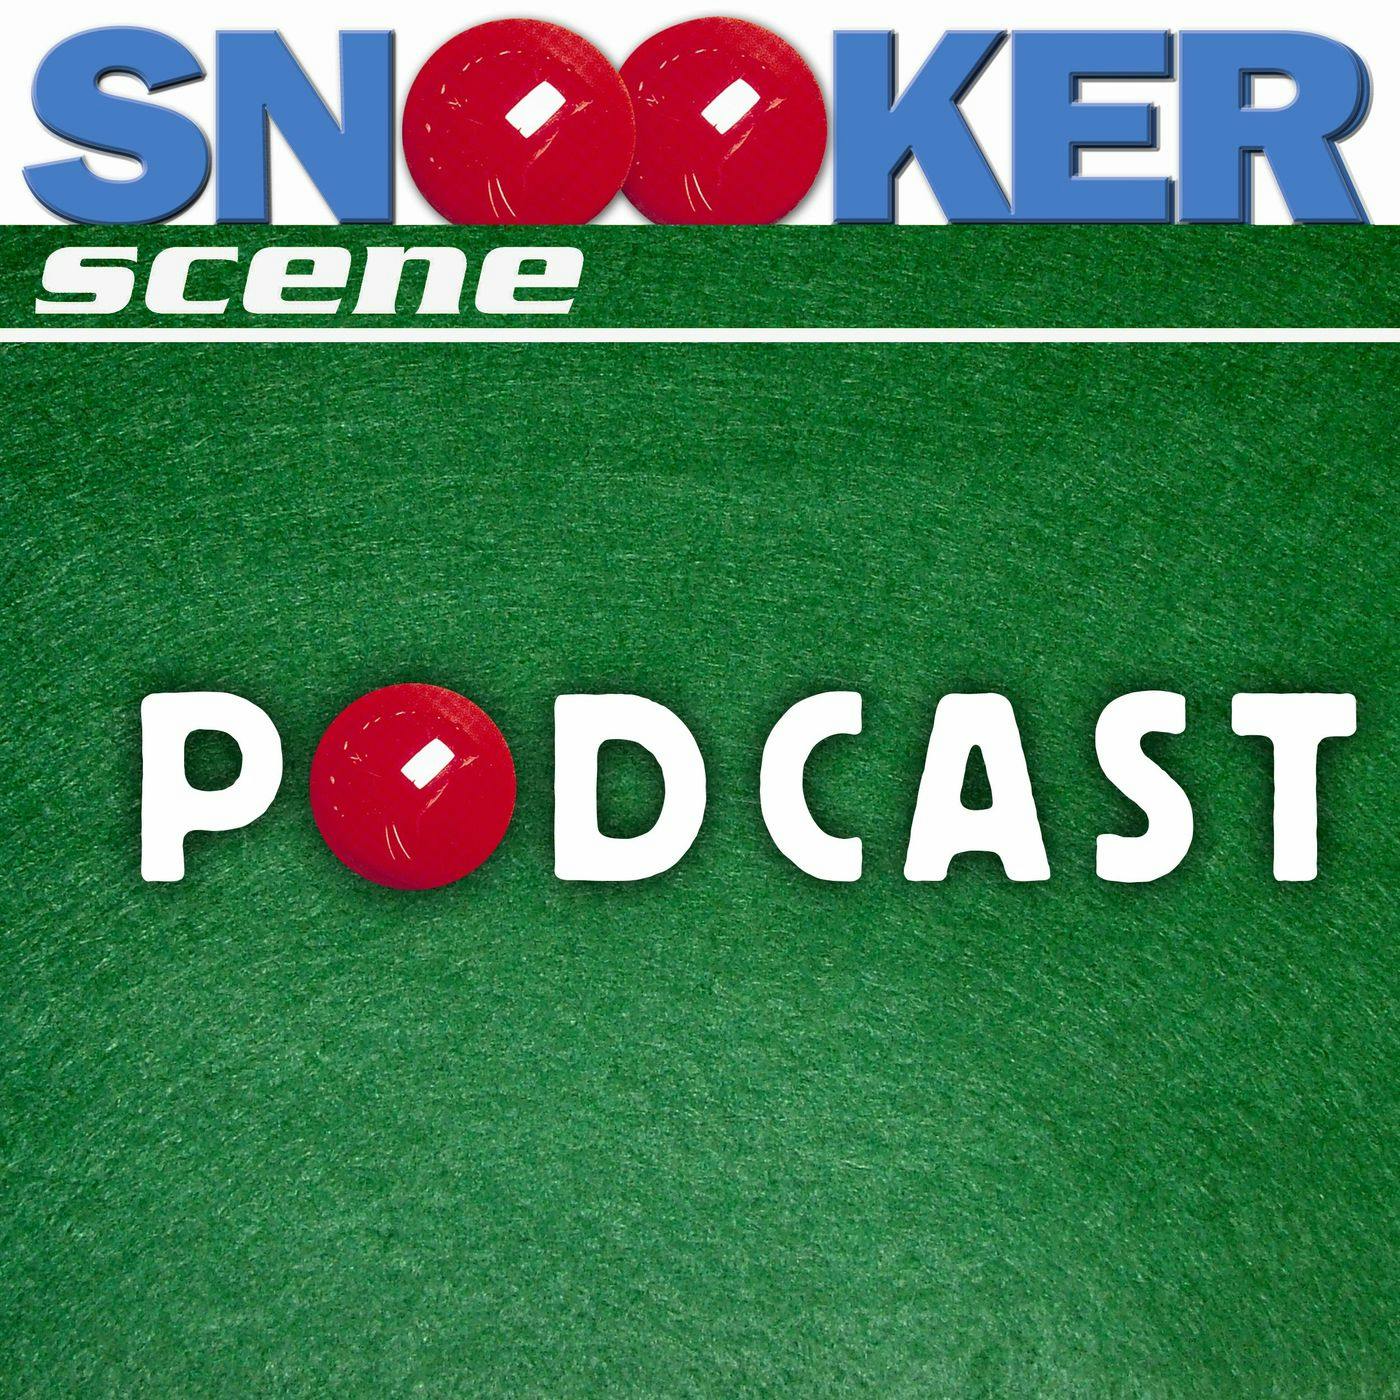 Snooker Scene Podcast episode 136 - The John Higgins Triple Crown